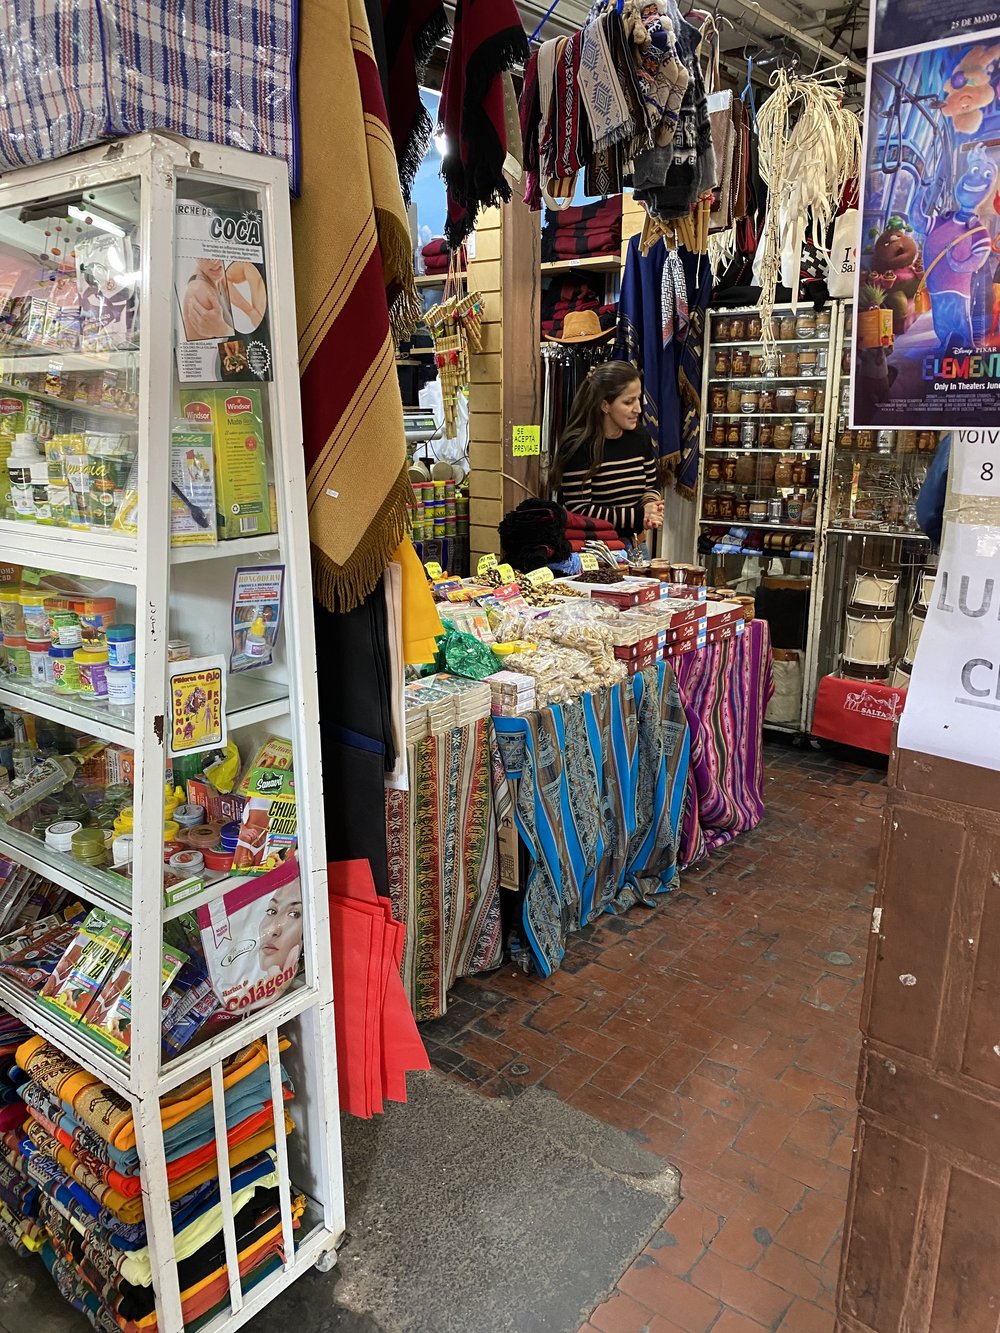 Market stall with fabrics